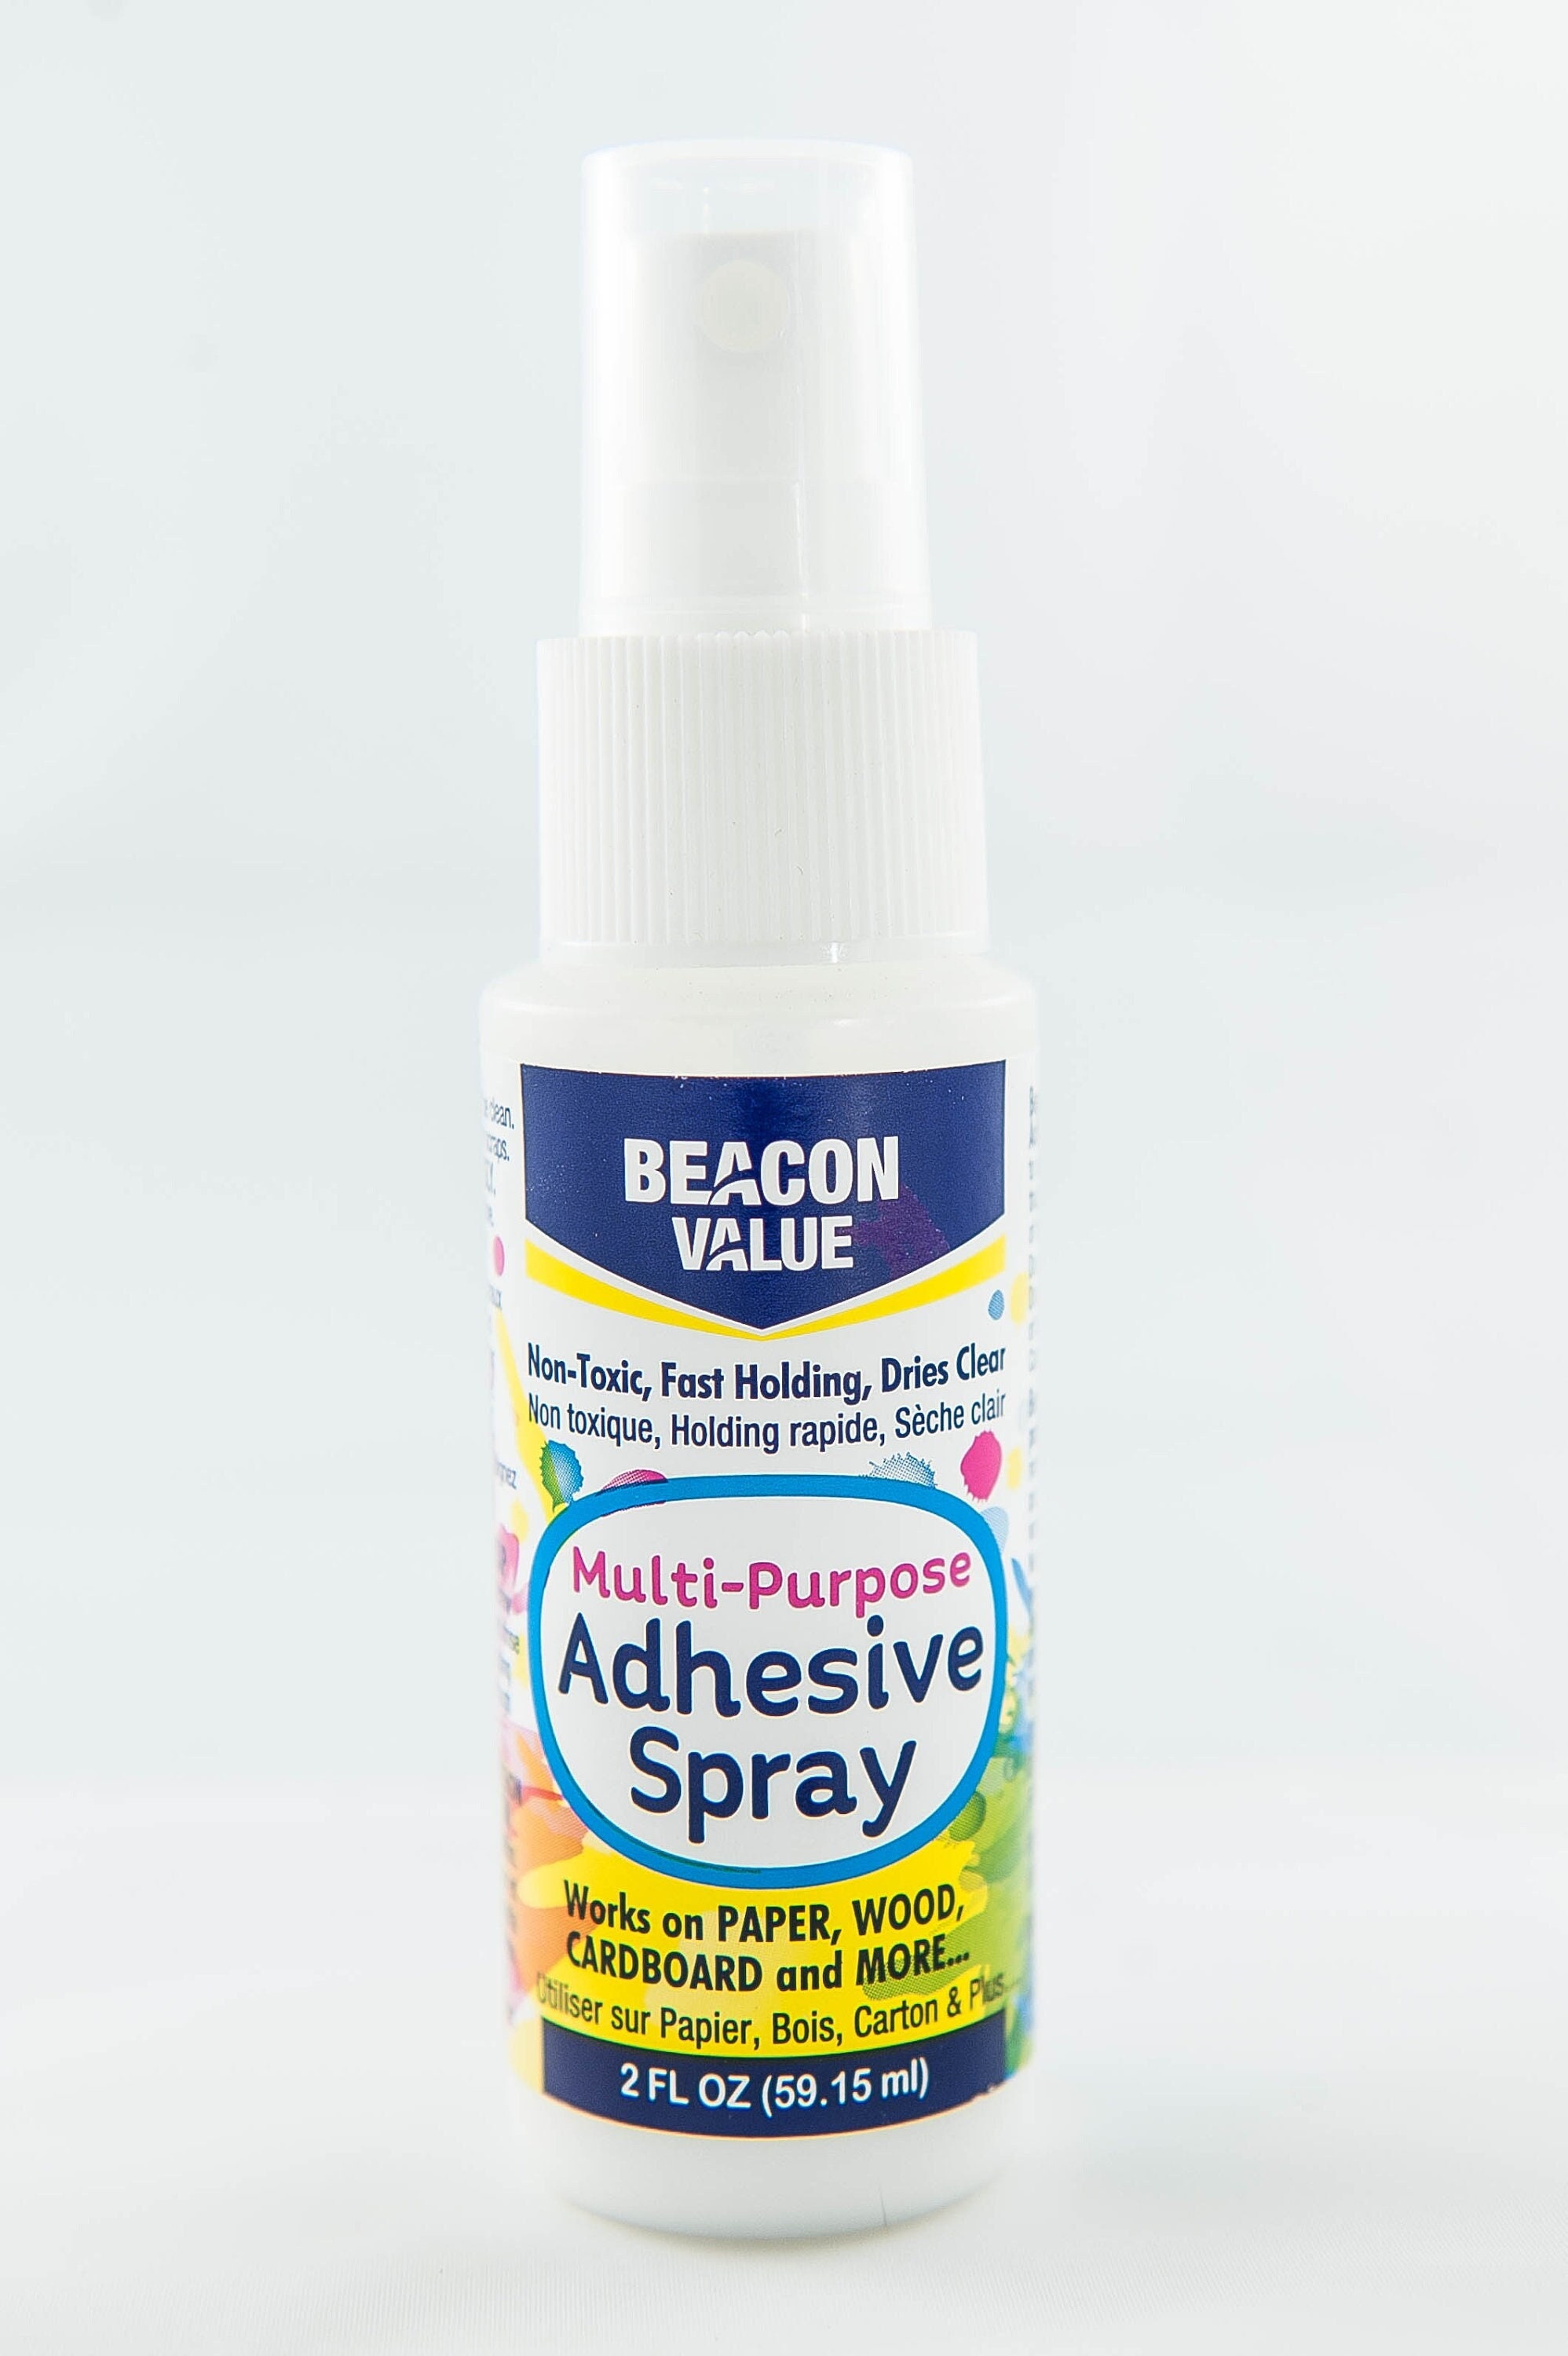 SpraynBond Fusible Adhesive Fabric Spray –